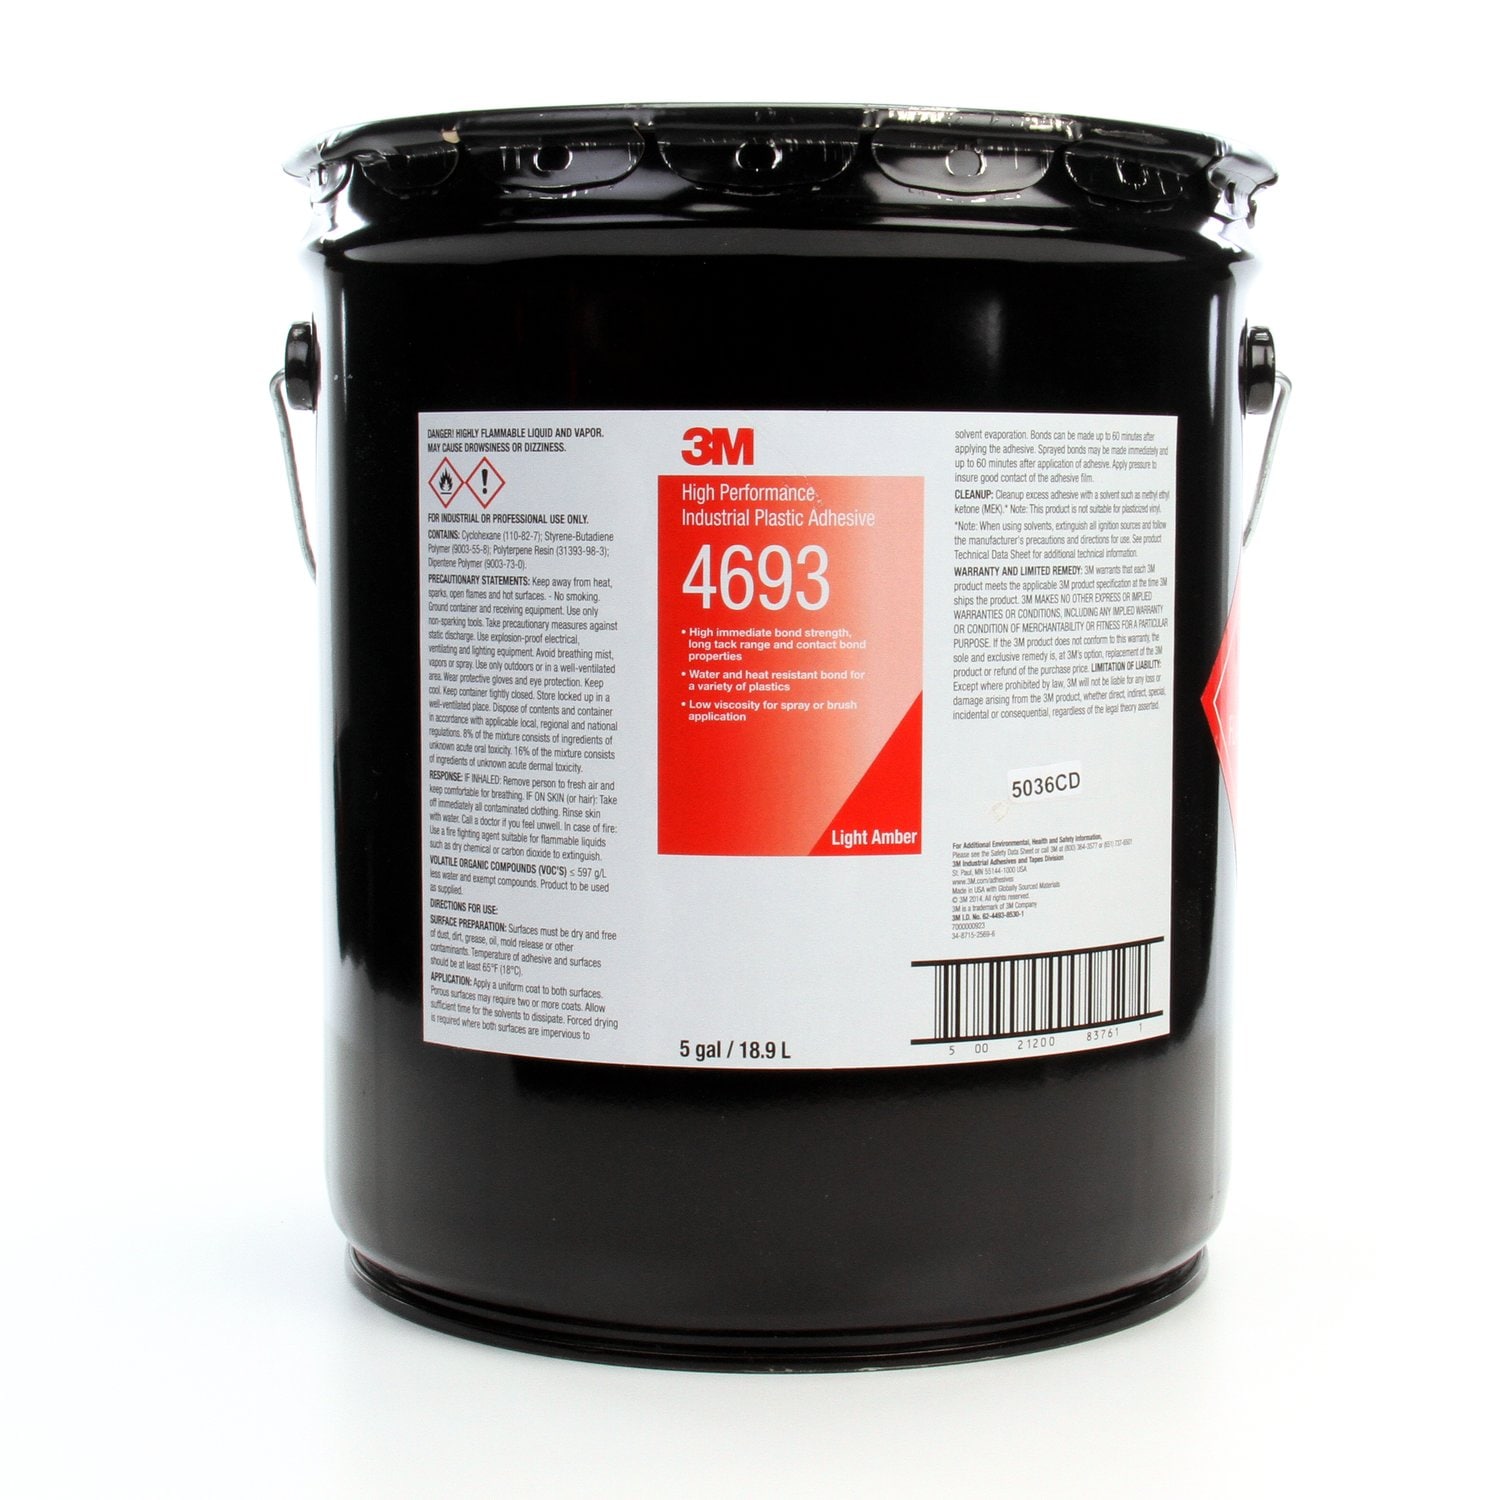 7000000923 - 3M High Performance Industrial Plastic Adhesive 4693, Light Amber, 5
Gallon Drum (Pail)